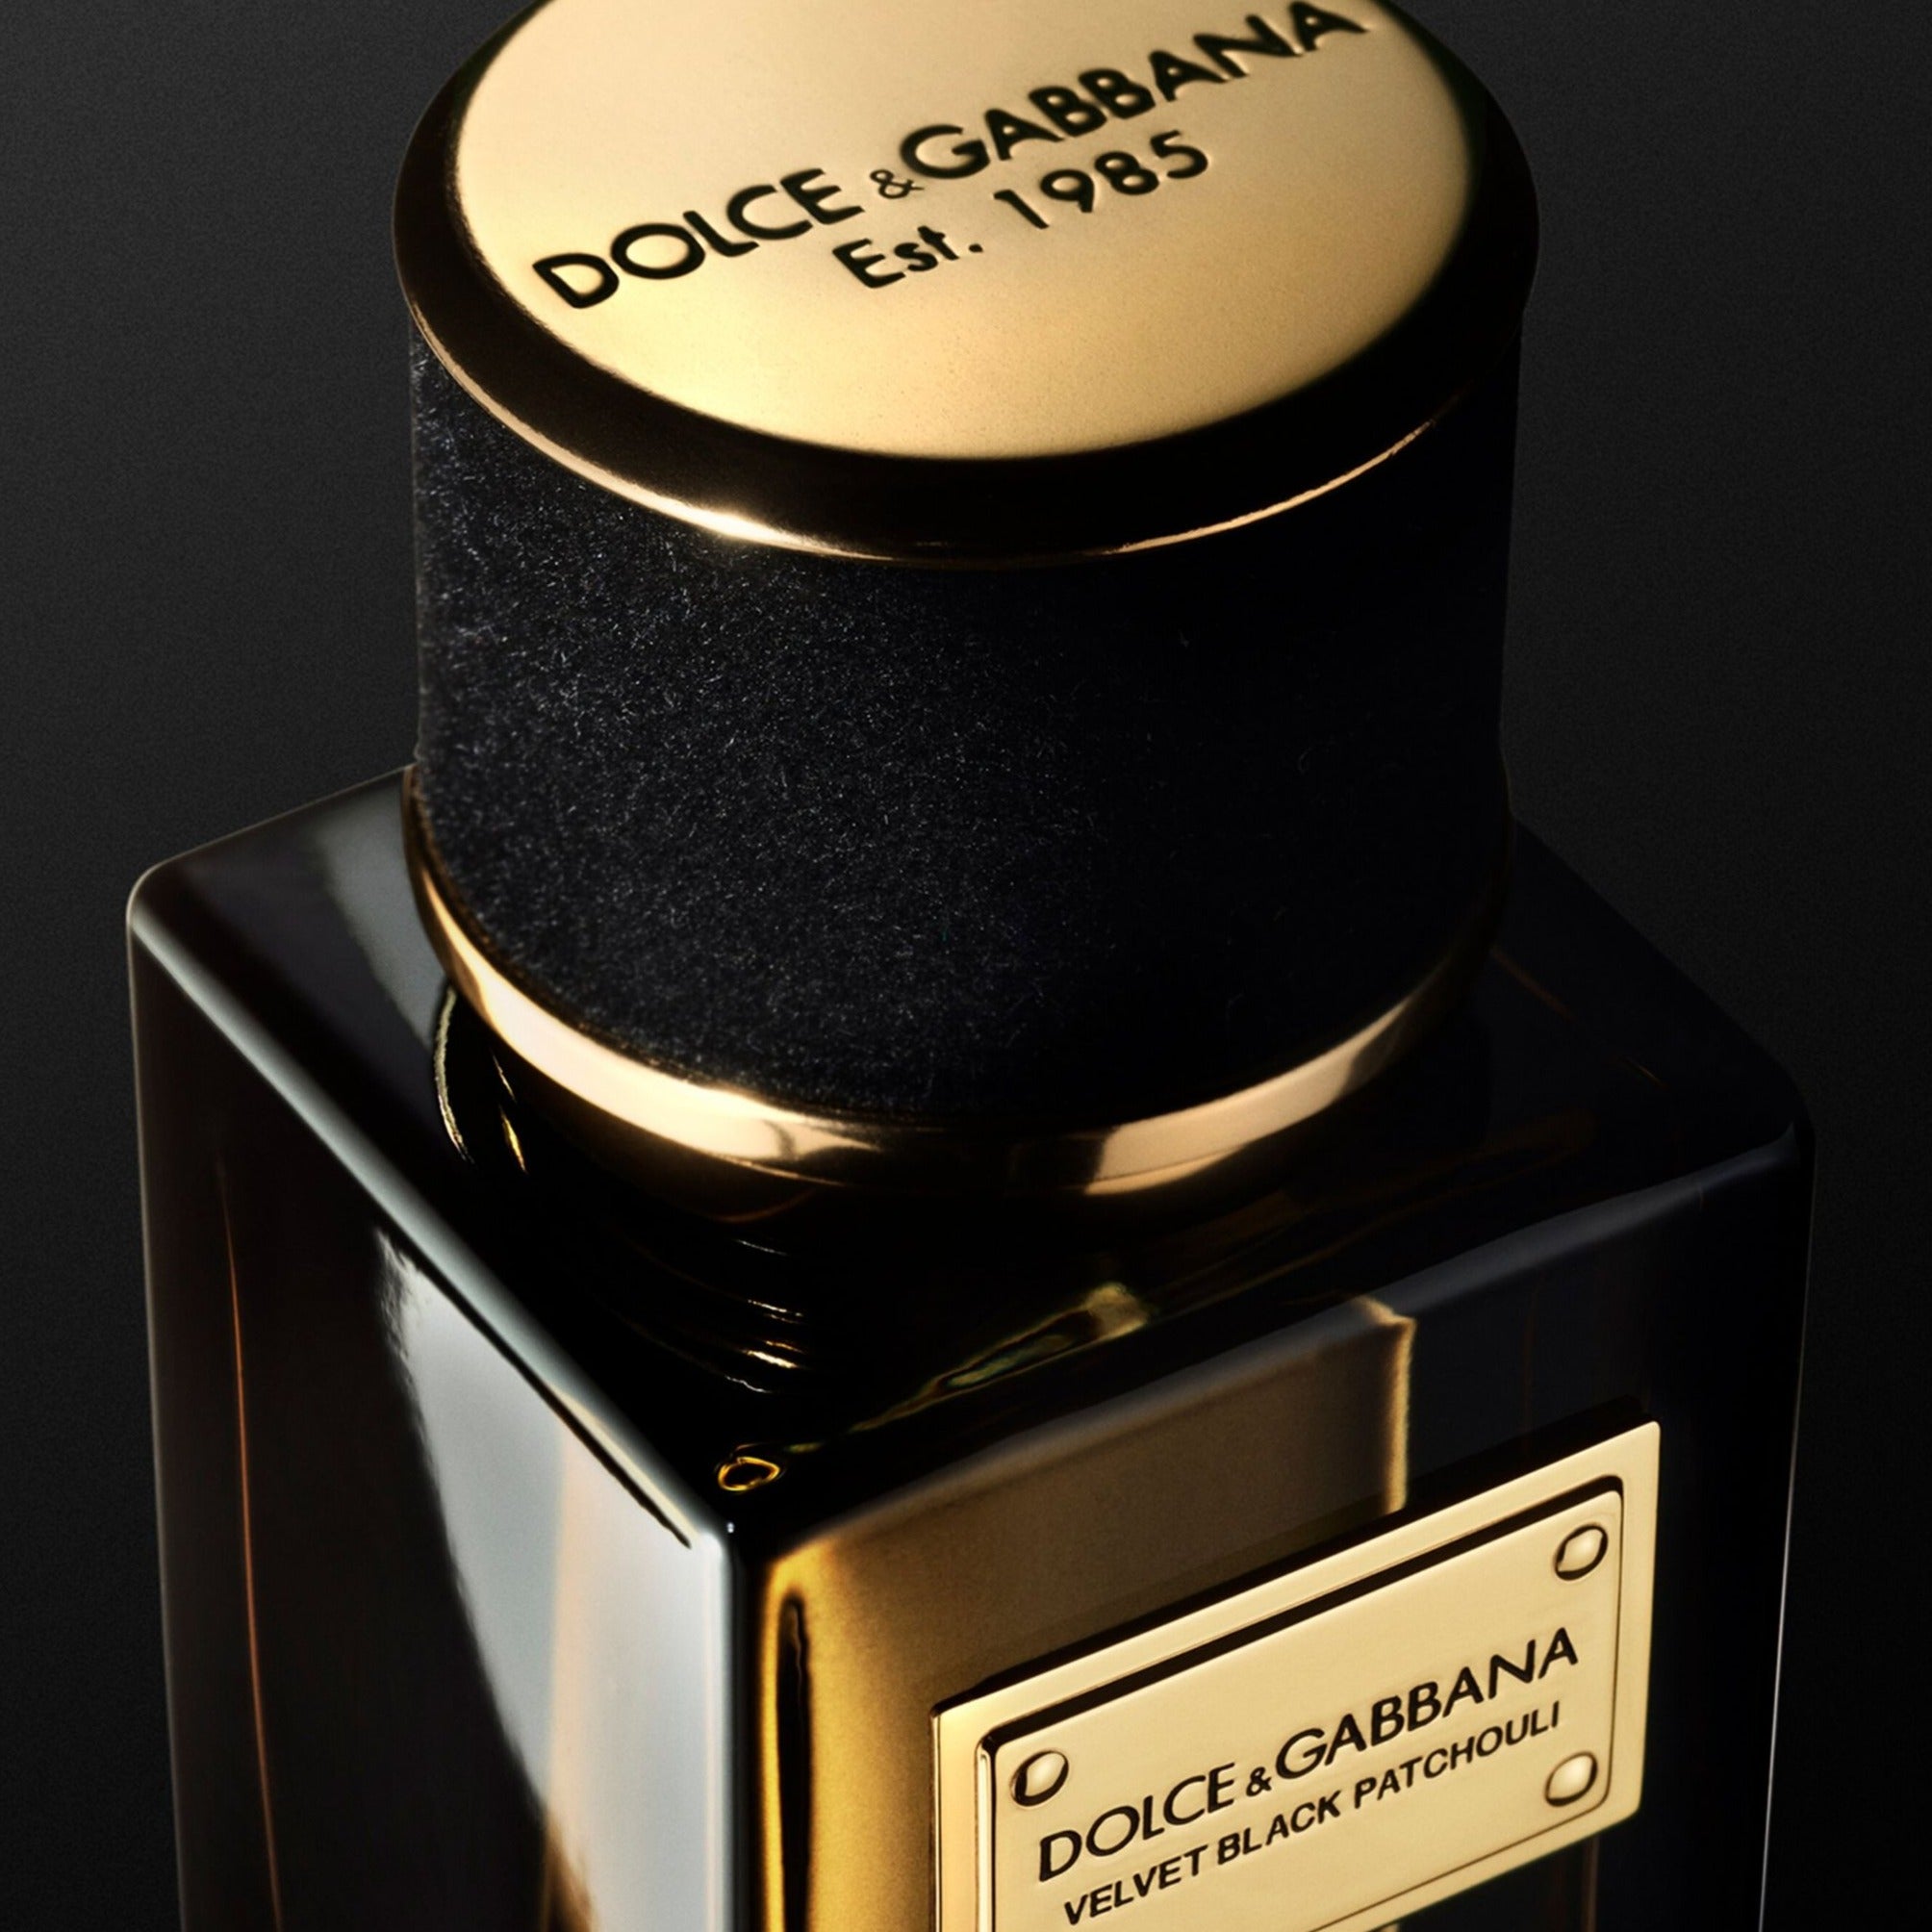 Dolce & Gabbana Velvet Black Patchouli EDP | My Perfume Shop Australia